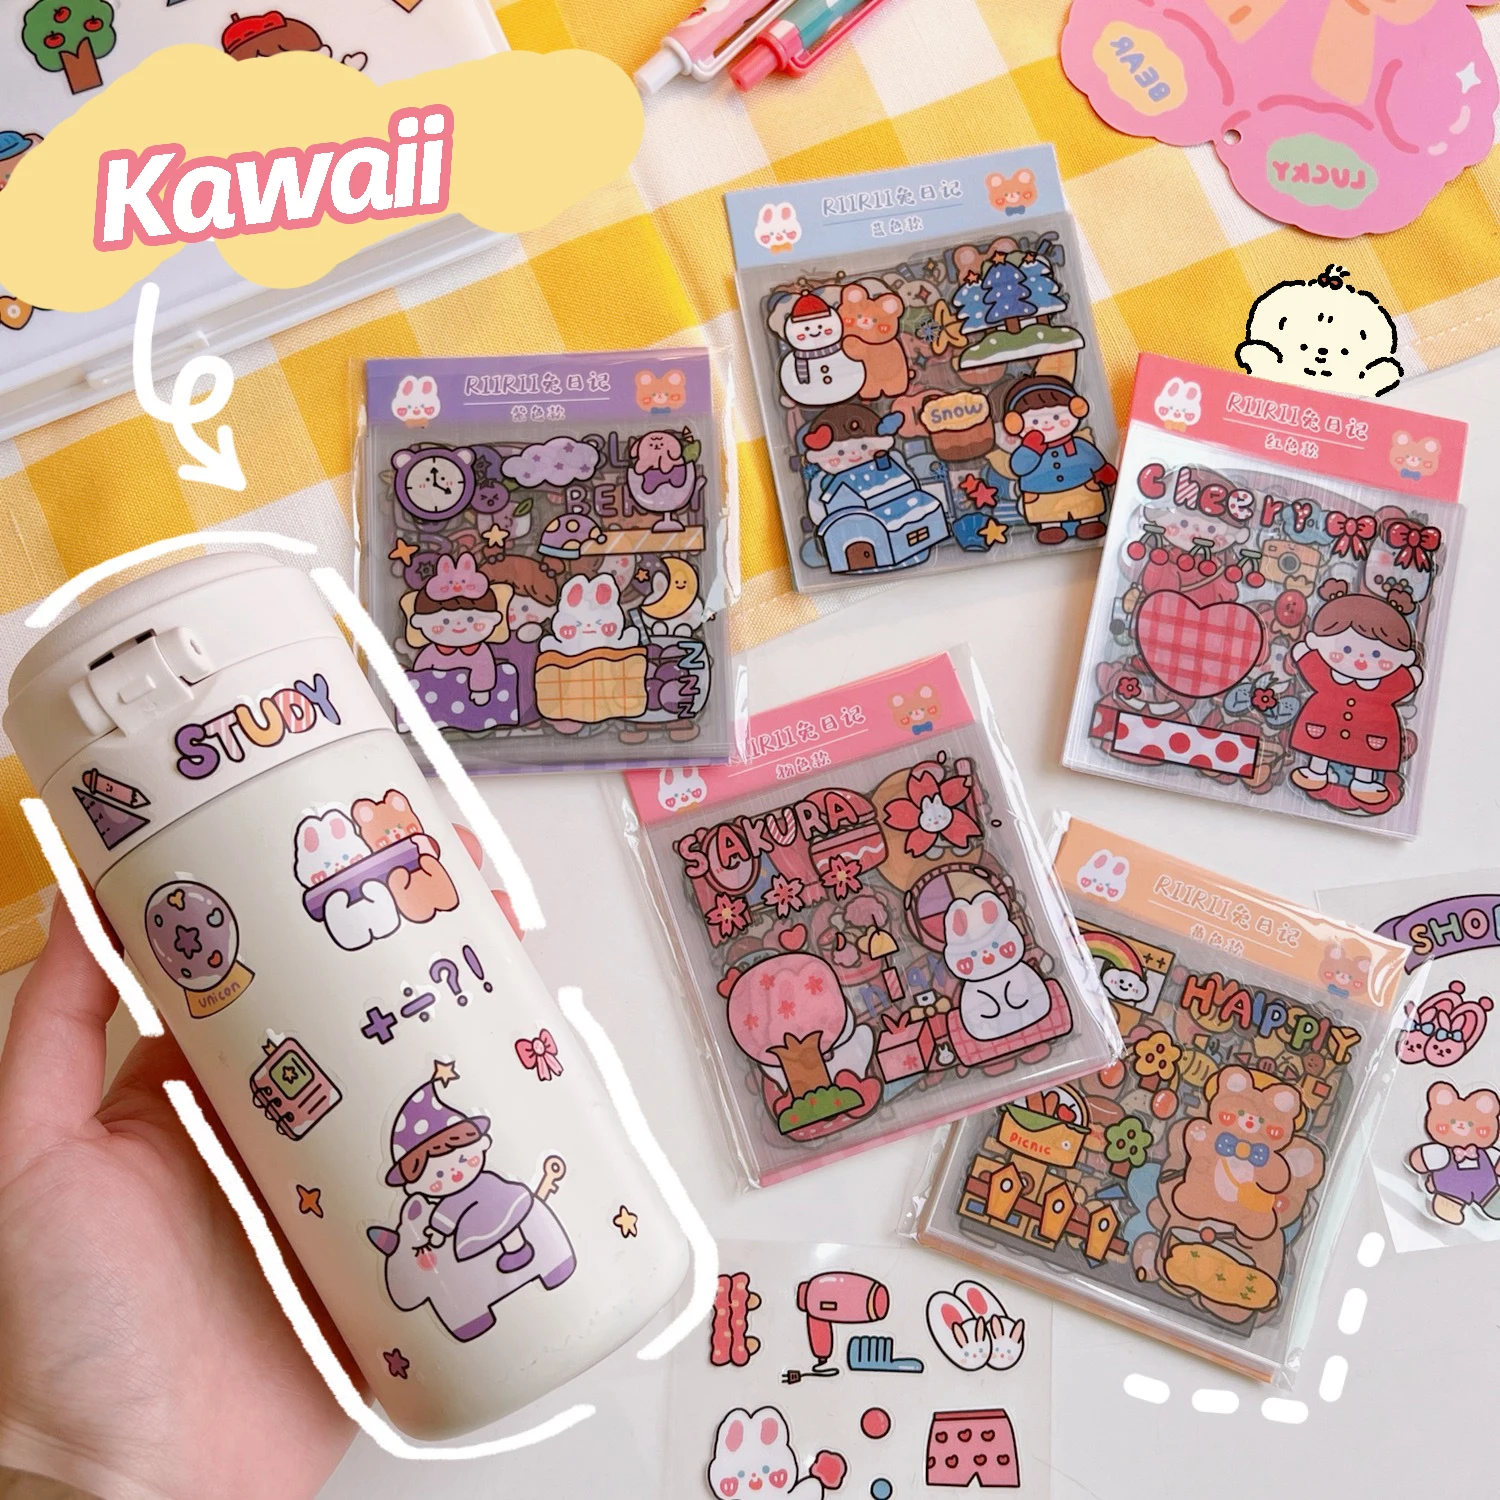 20 Sheets/Pack Kawaii Cute Cartoon Stickers Stationery Journal Decorative Small Pattern Journaling Stationery Art Supplies